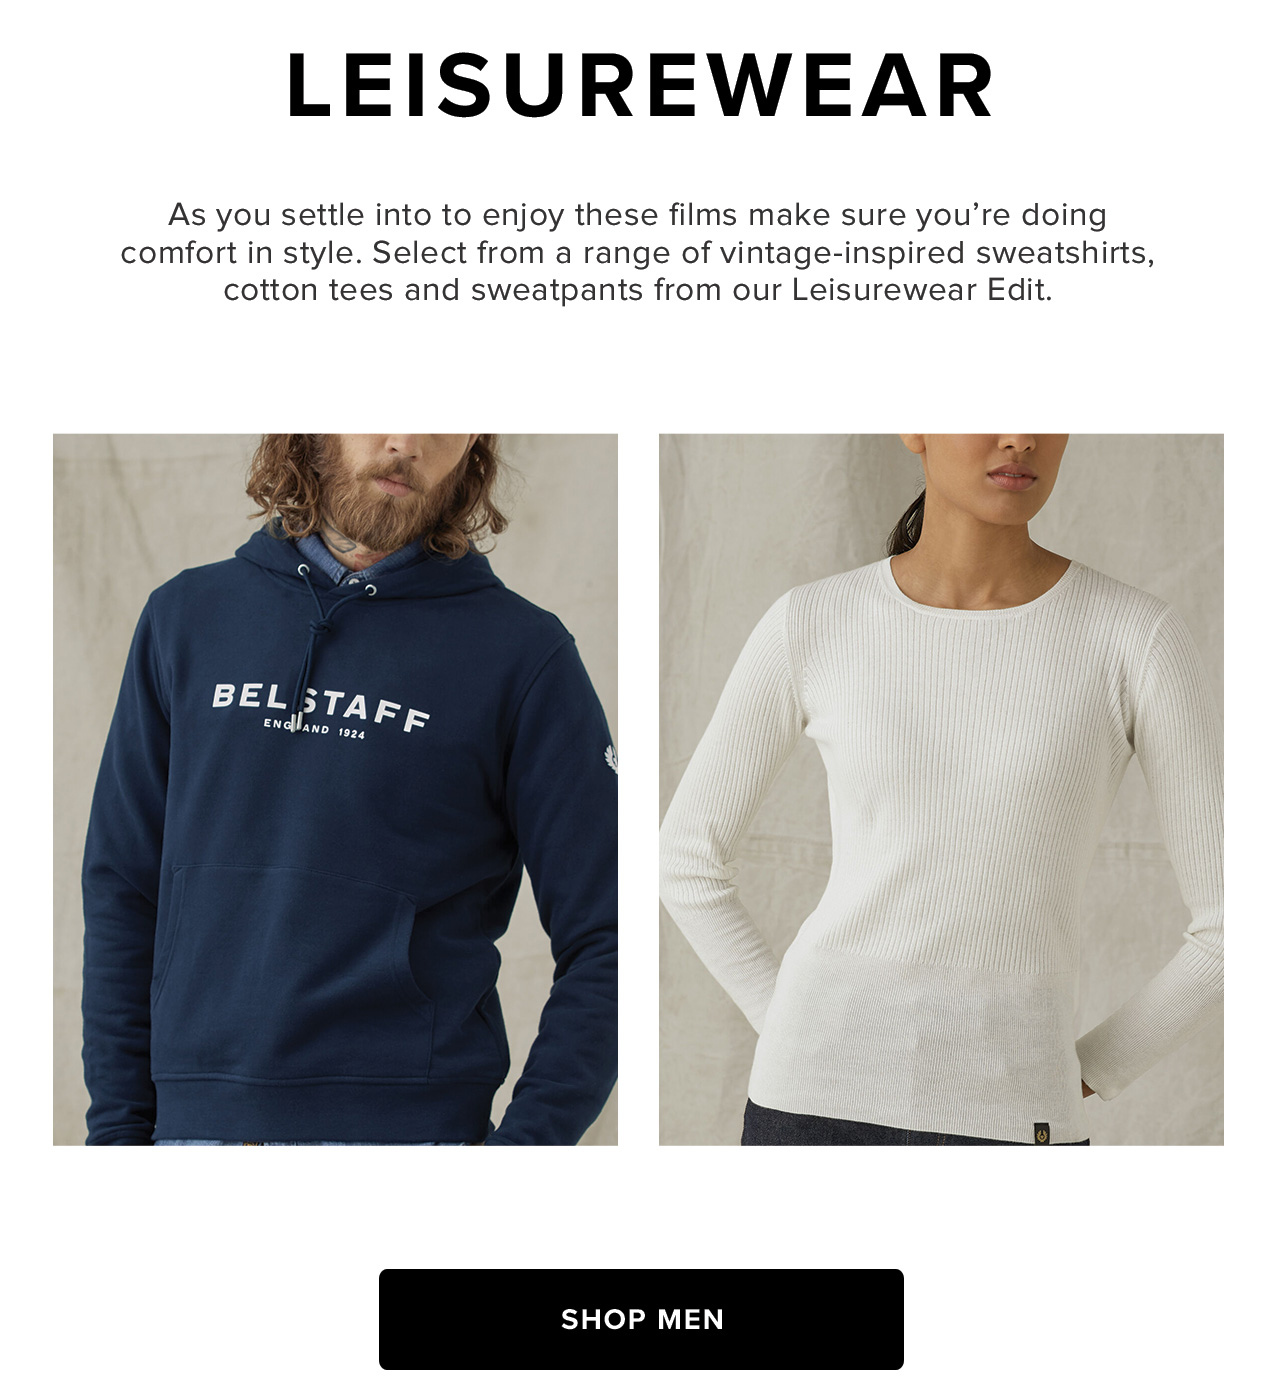 Leisurewear Edit - Shop Men